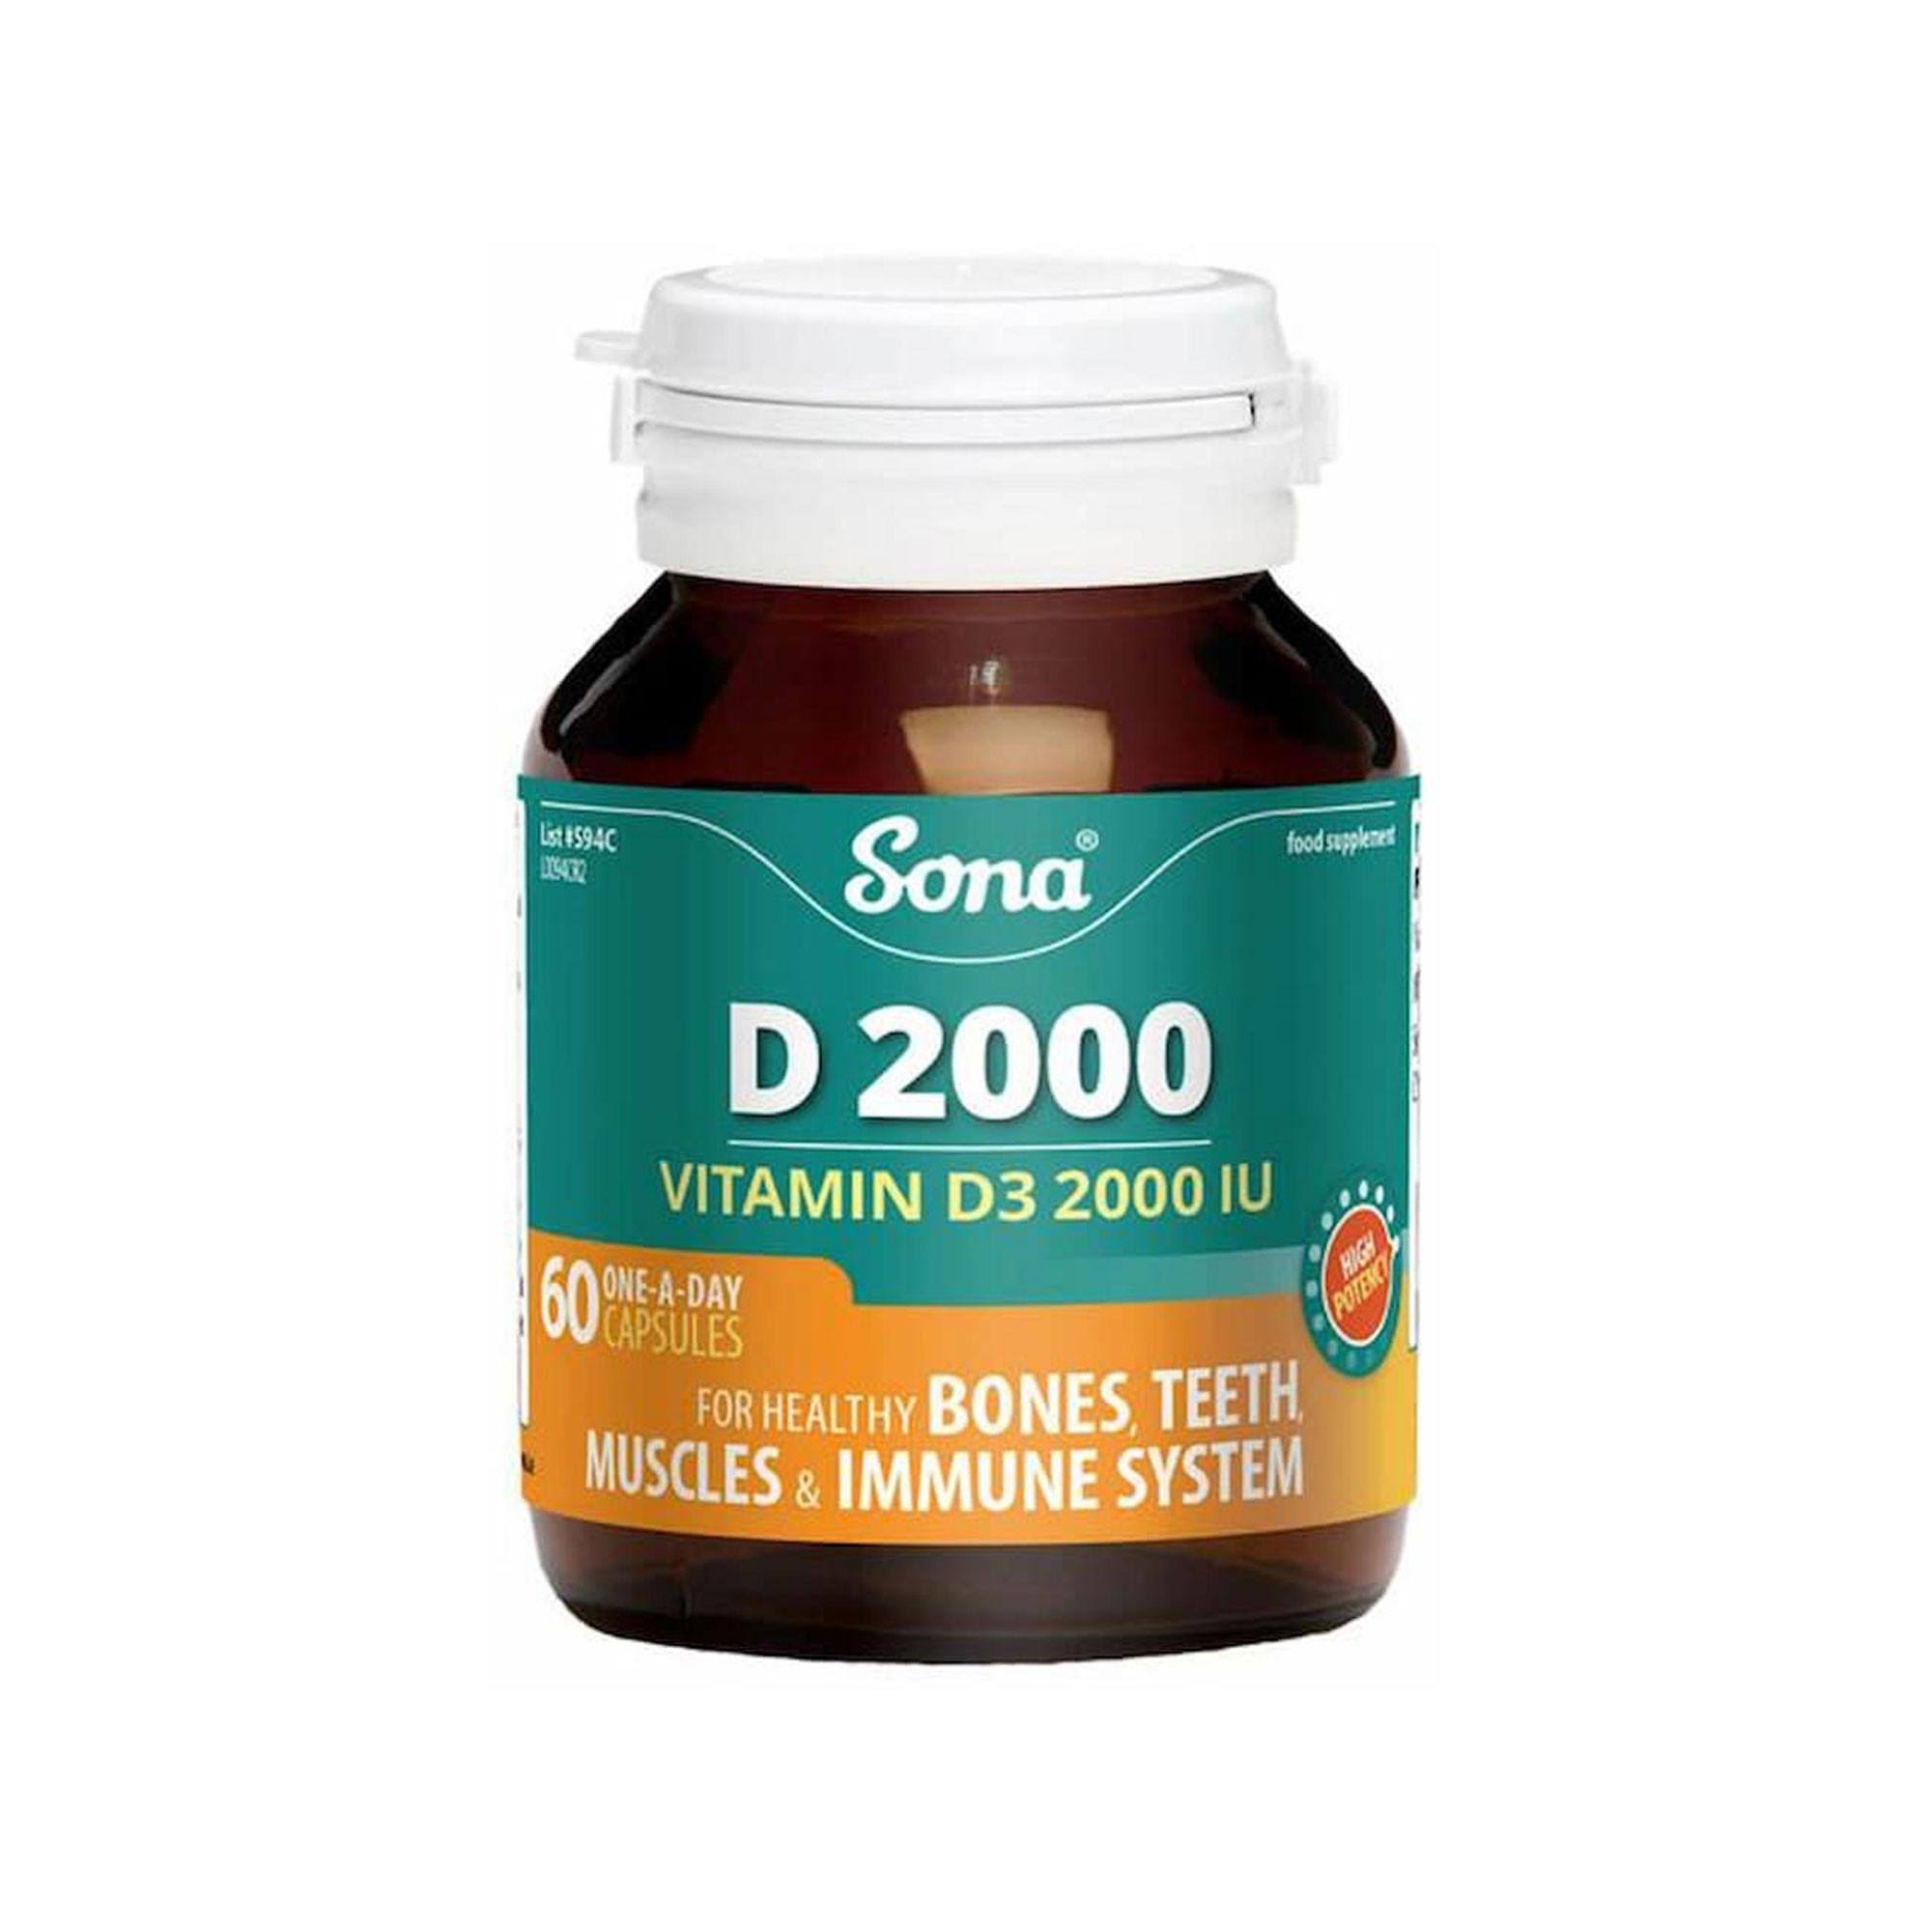 Sona Vitamin D 2000 60 Capsules